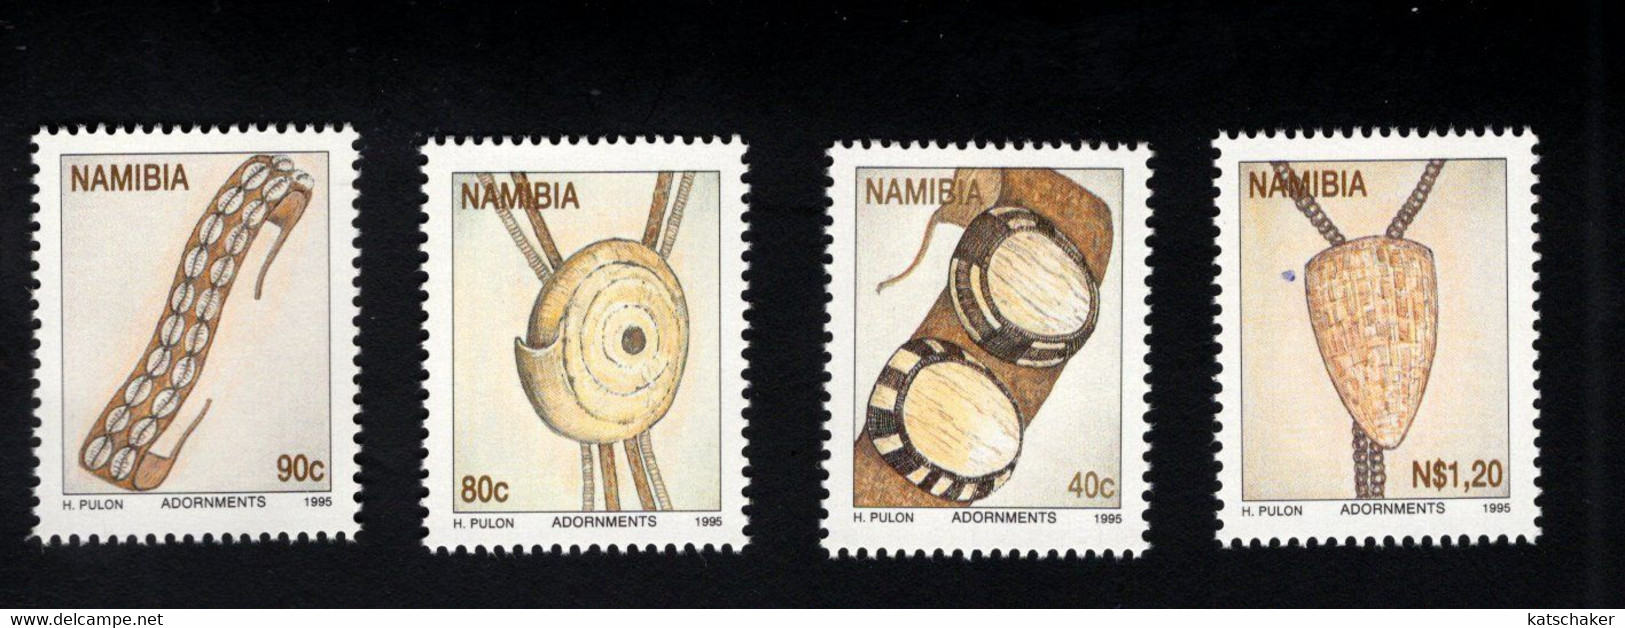 1365450943 1995 SCOTT 787 790 (XX) POSTFRIS MINT NEVER HINGED EINWANDFREI  - TRADITIONAL ADORNMENTS - BUTTONS - SHELLS - Namibia (1990- ...)